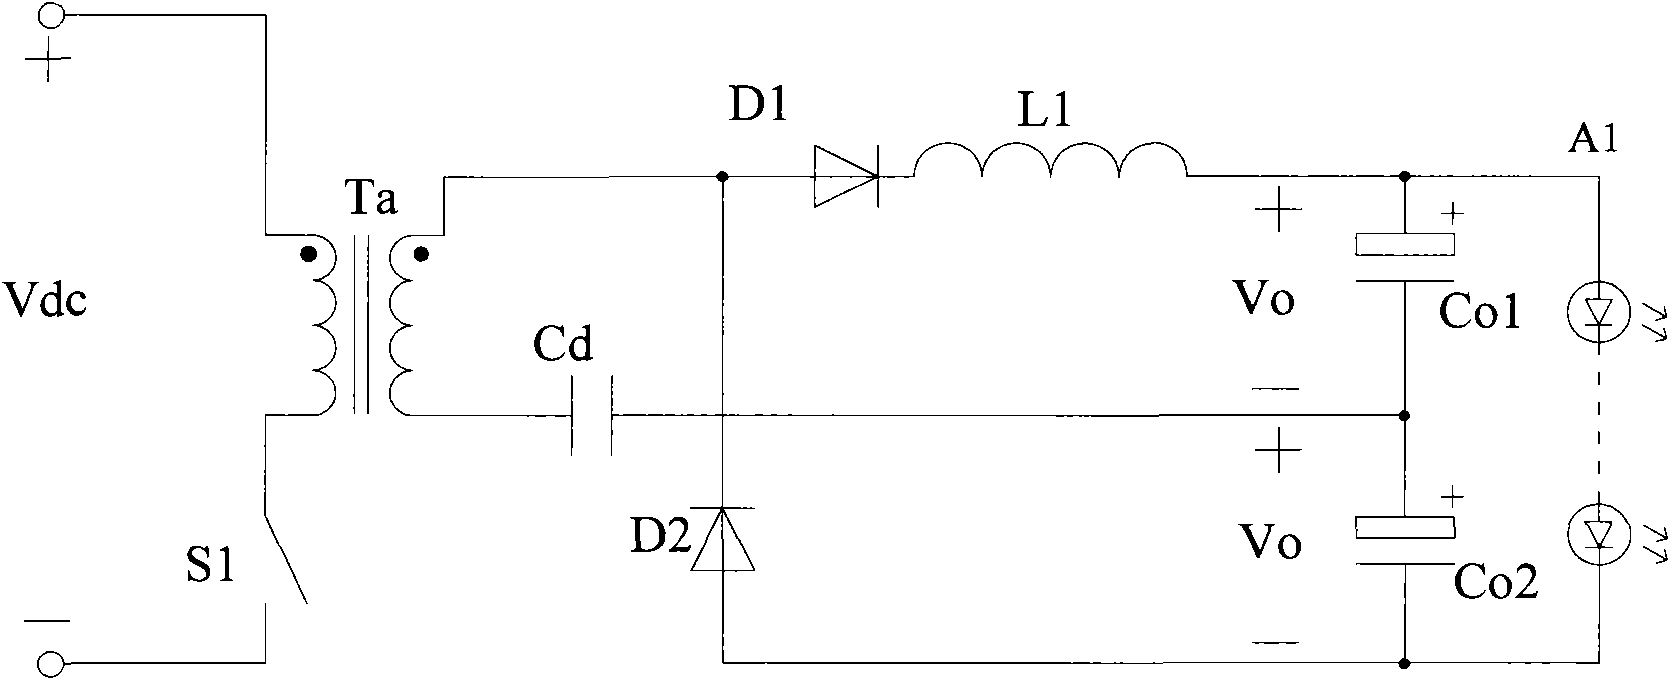 DC-DC (direct current-direct current) translation circuit